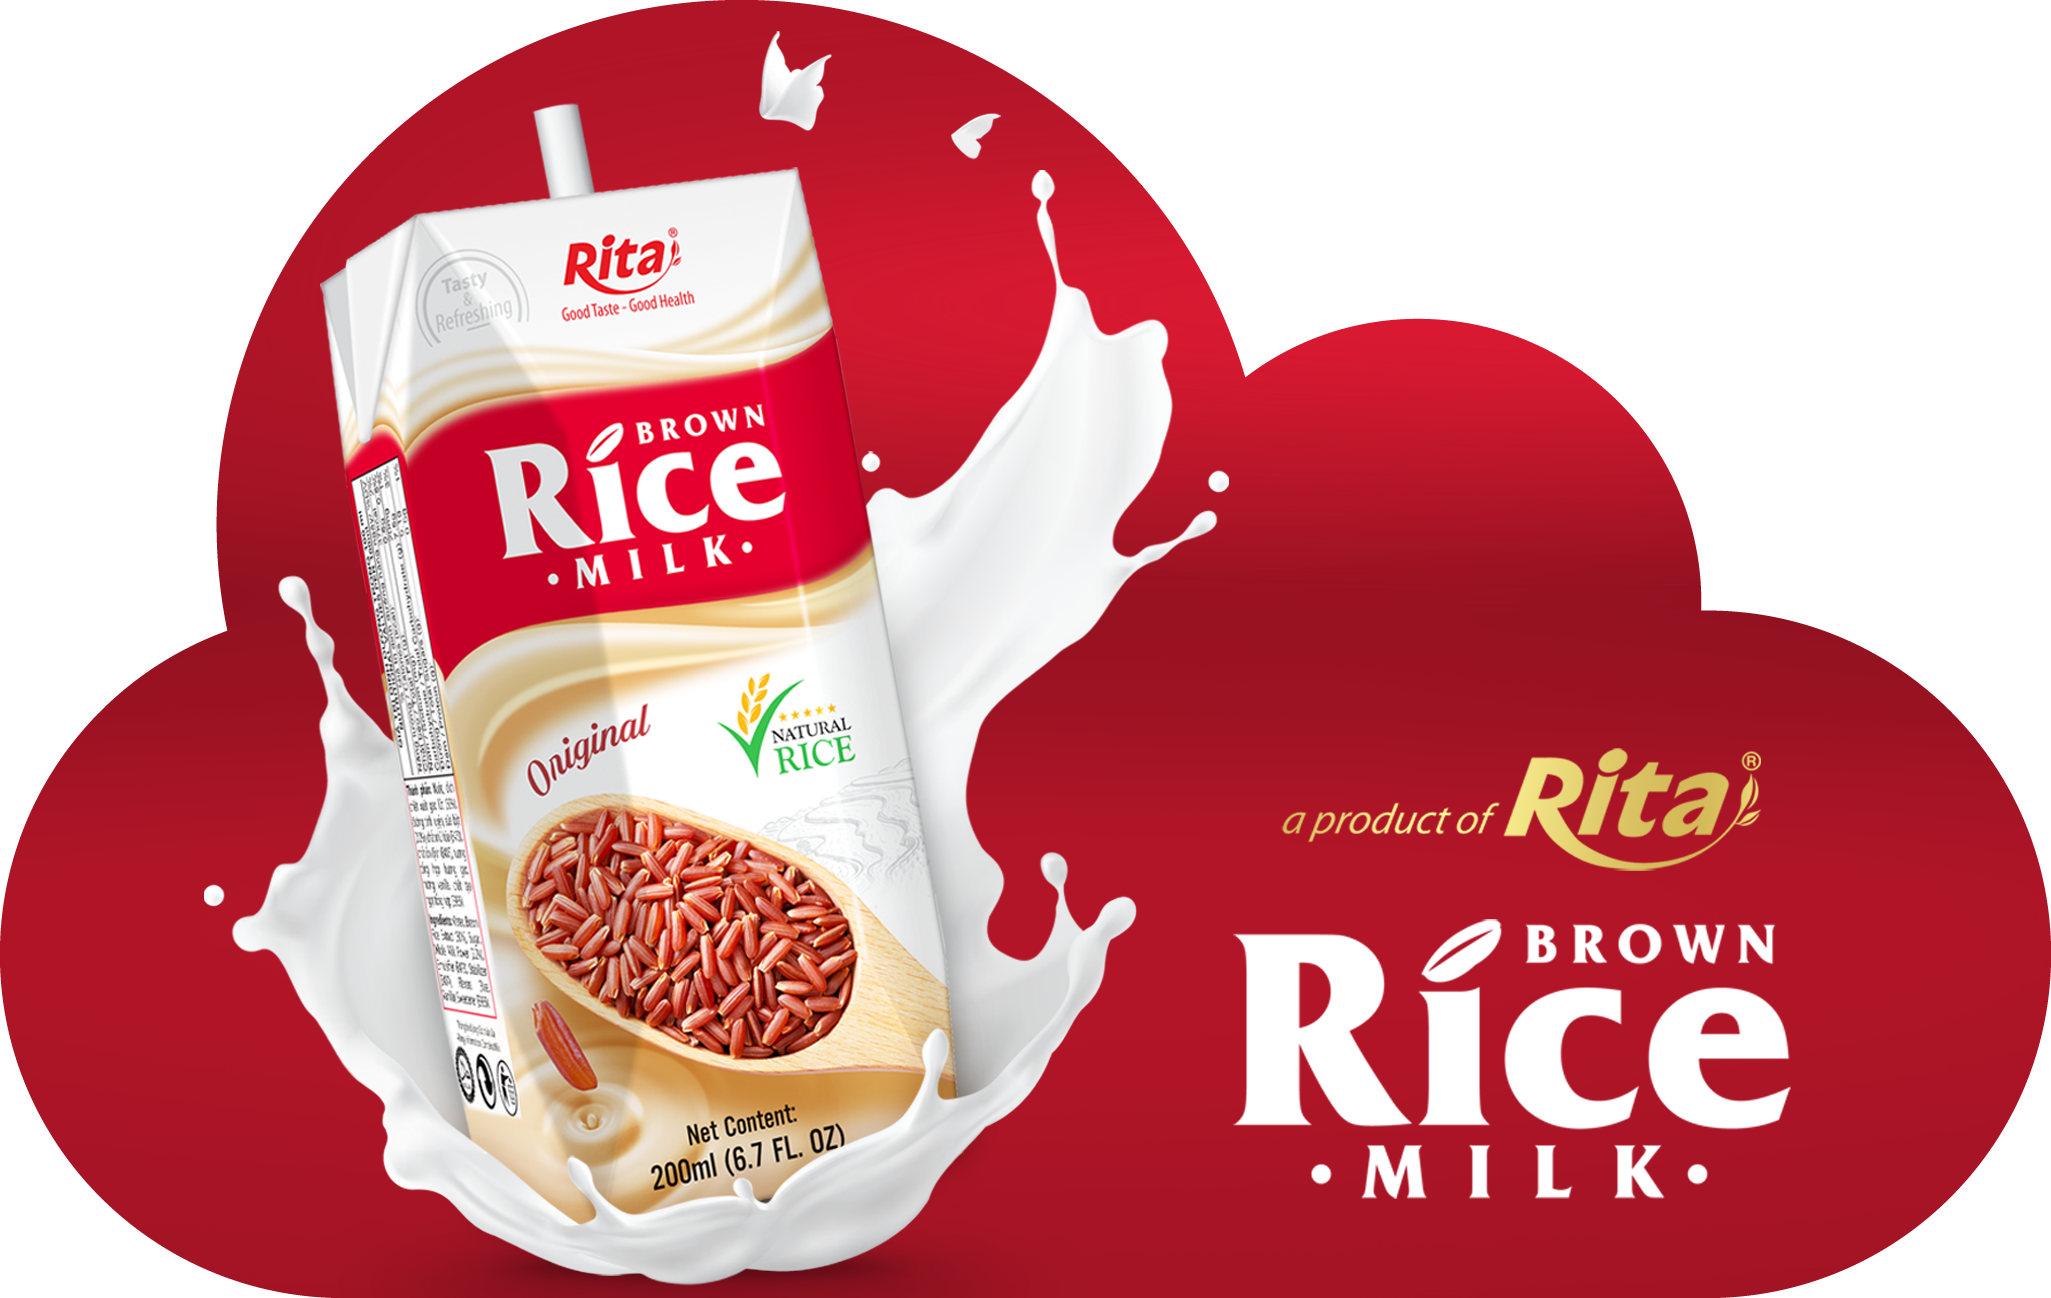 Rita Brrown Rice milk